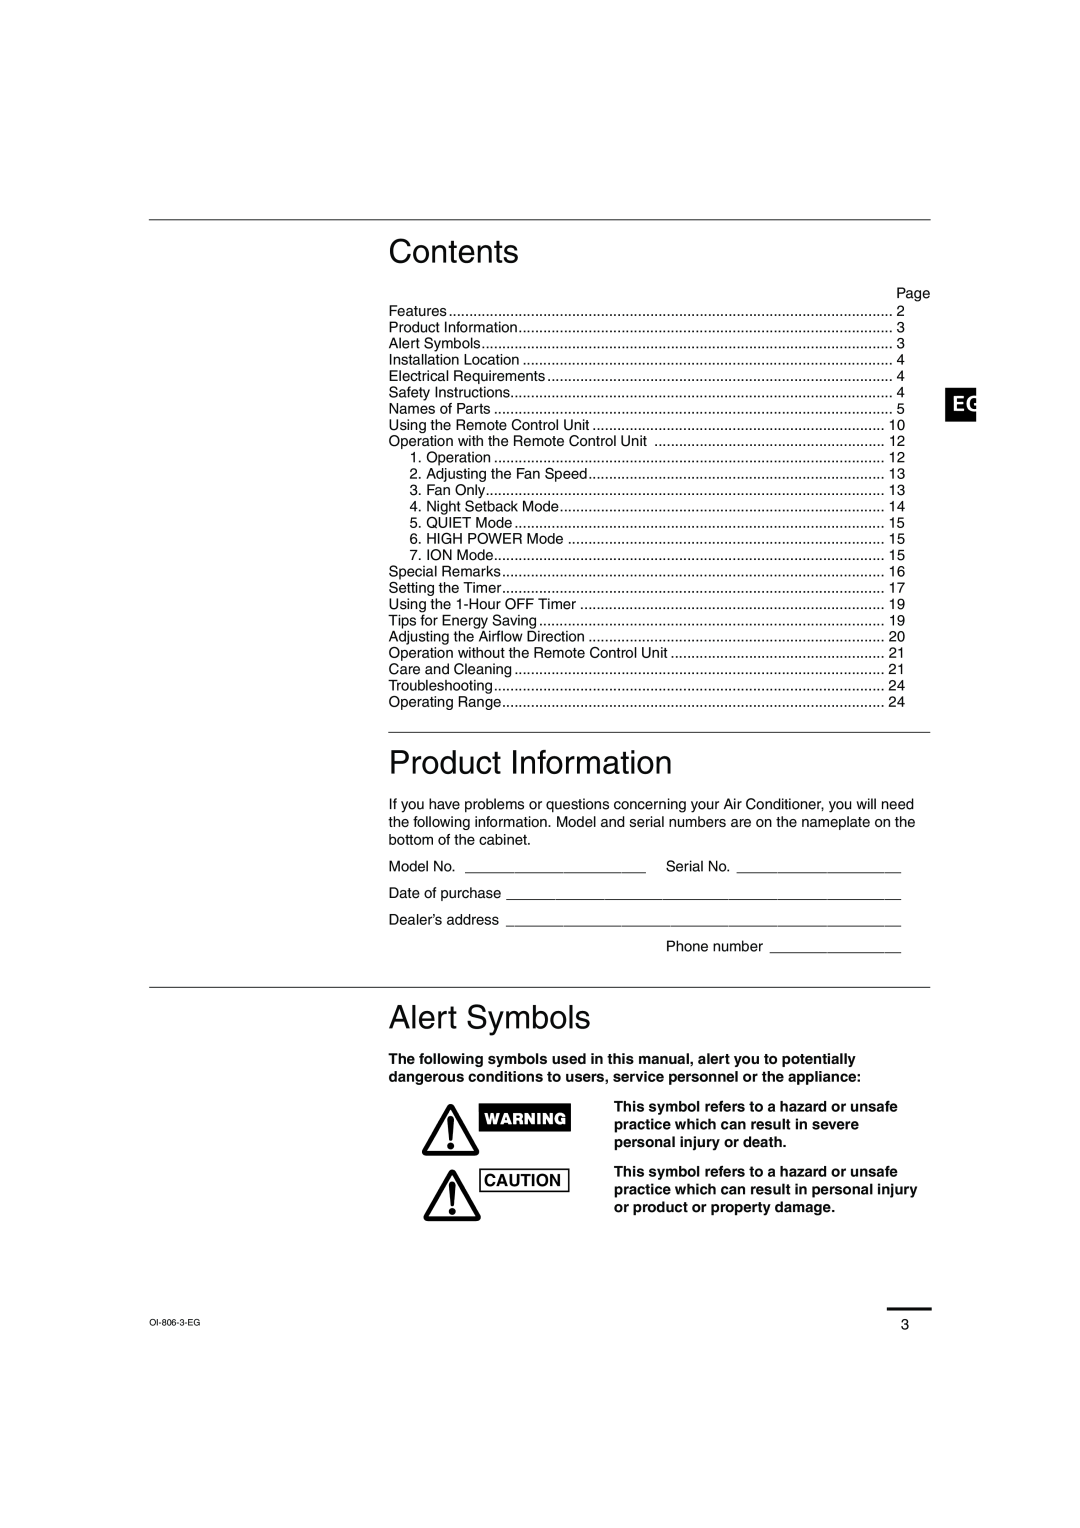 Sanyo KMS1272, KMS0972 instruction manual Contents, Product Information, Alert Symbols 